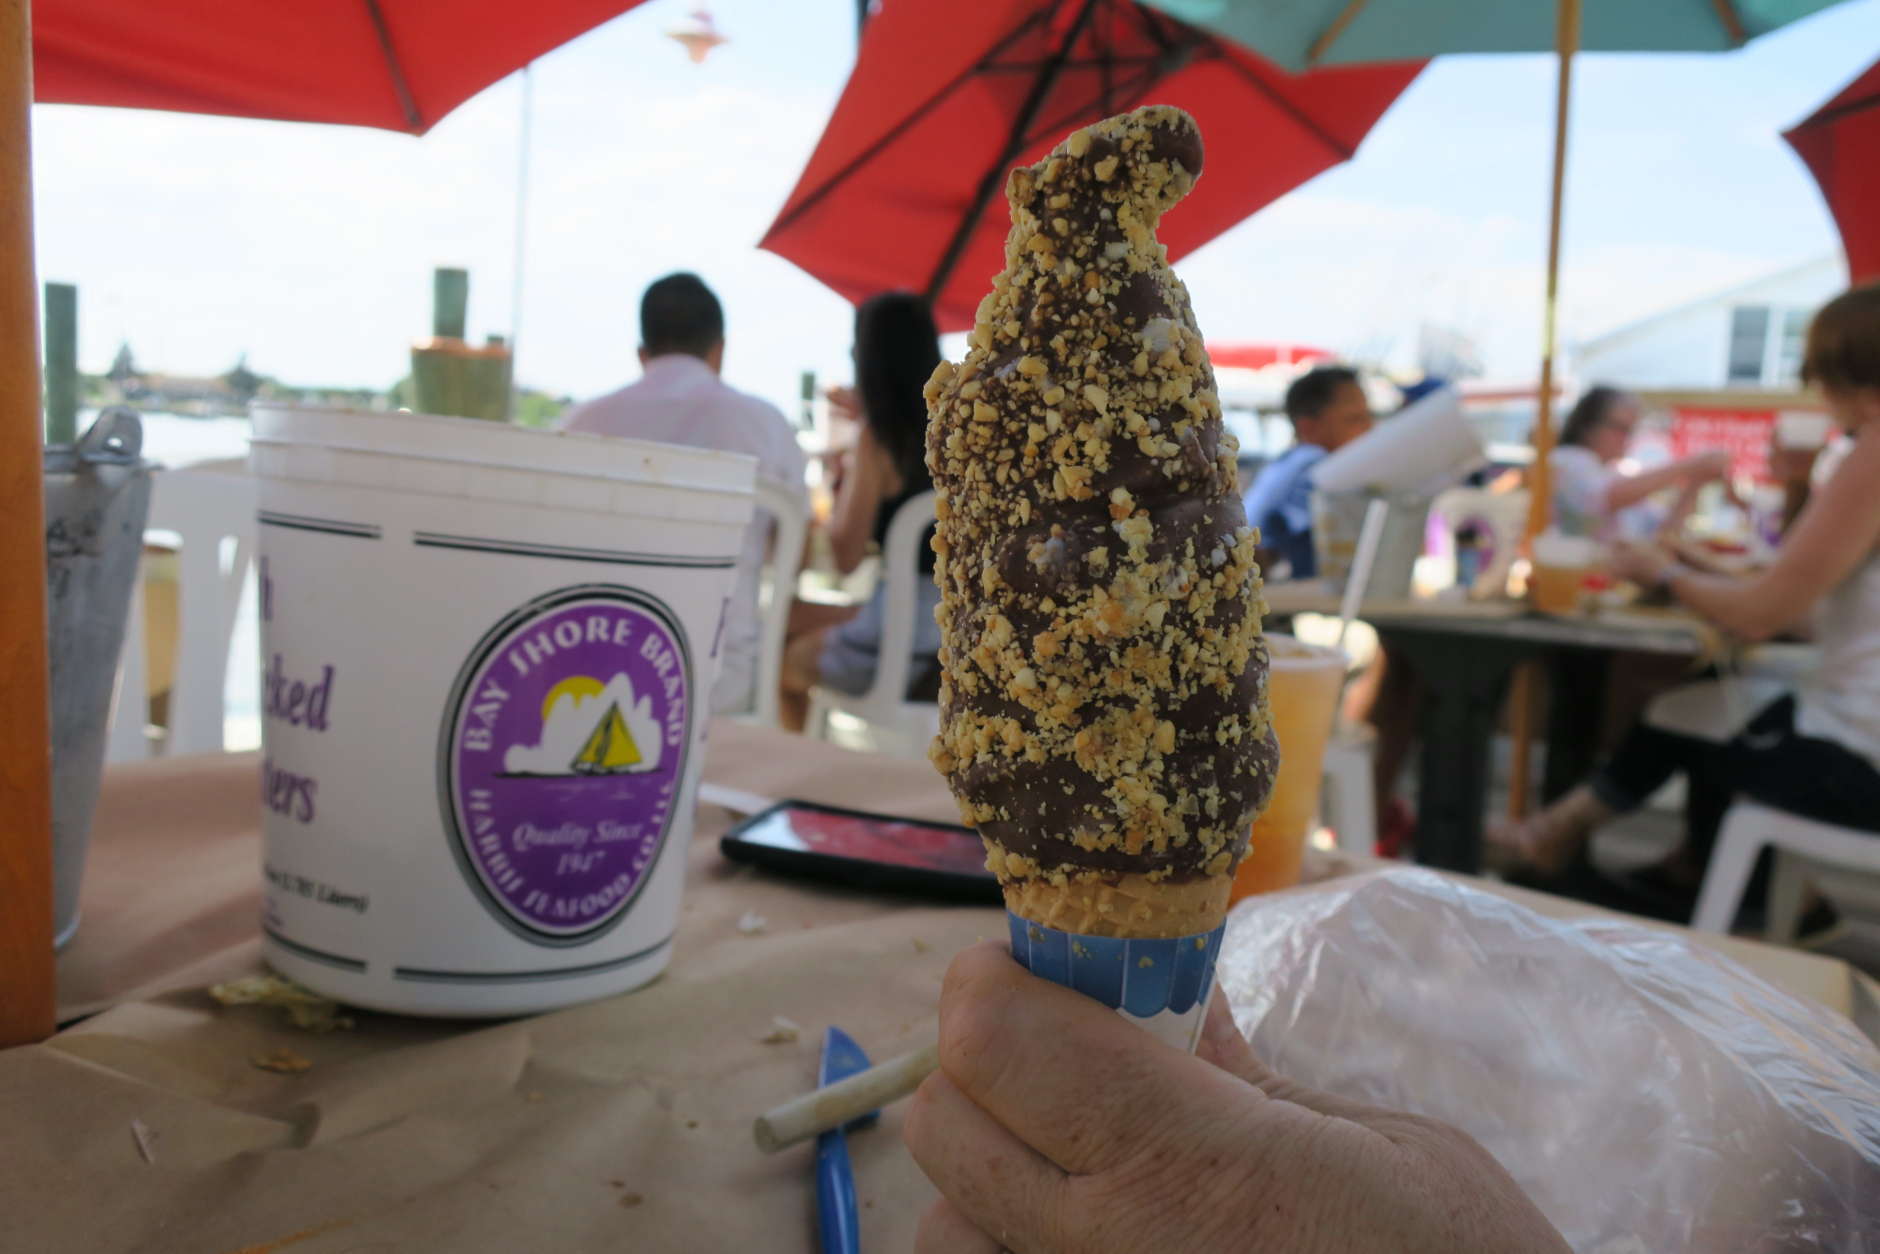 photo shows an ice cream cone